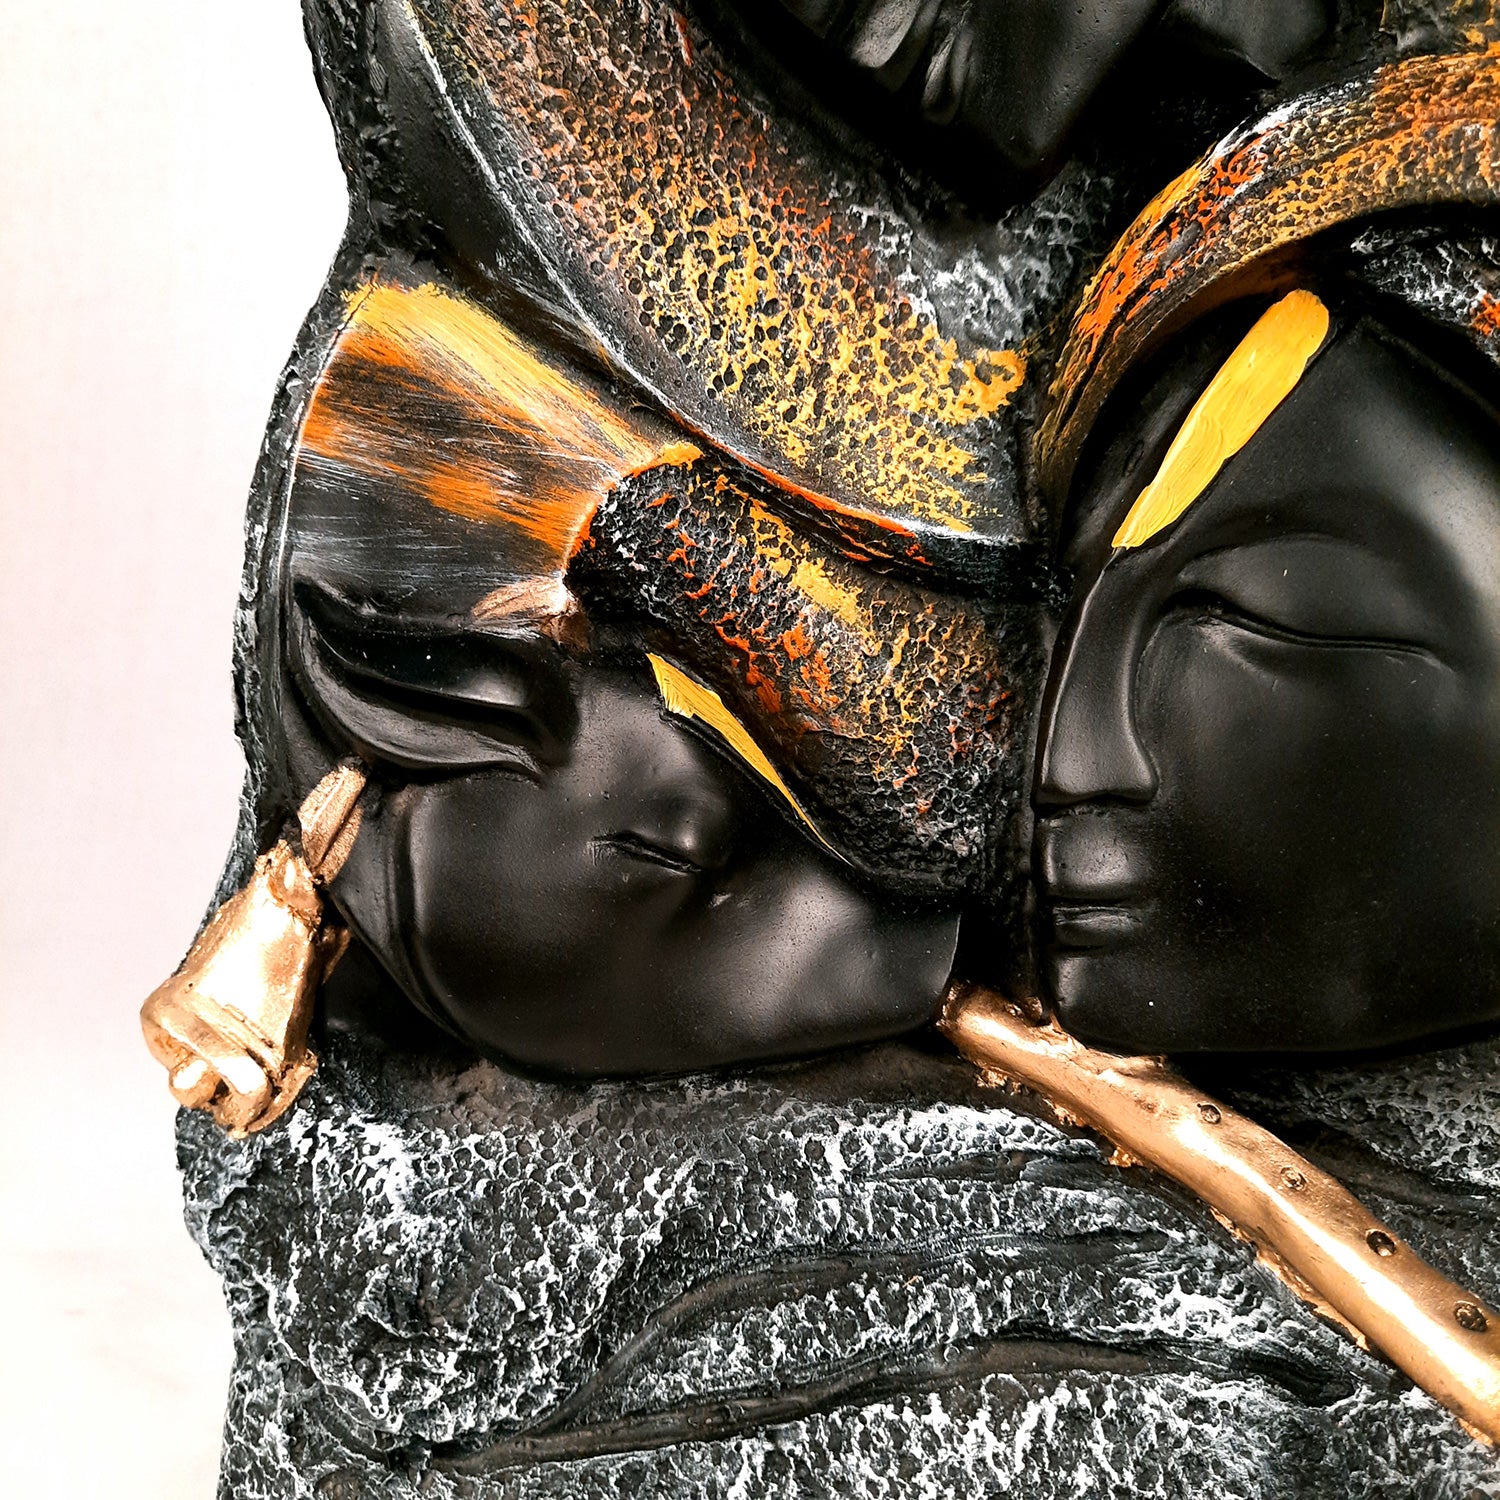 Radha Krishna Statue - For Living Room & Gifts - 15 Inch- Apkamart #Color_Black